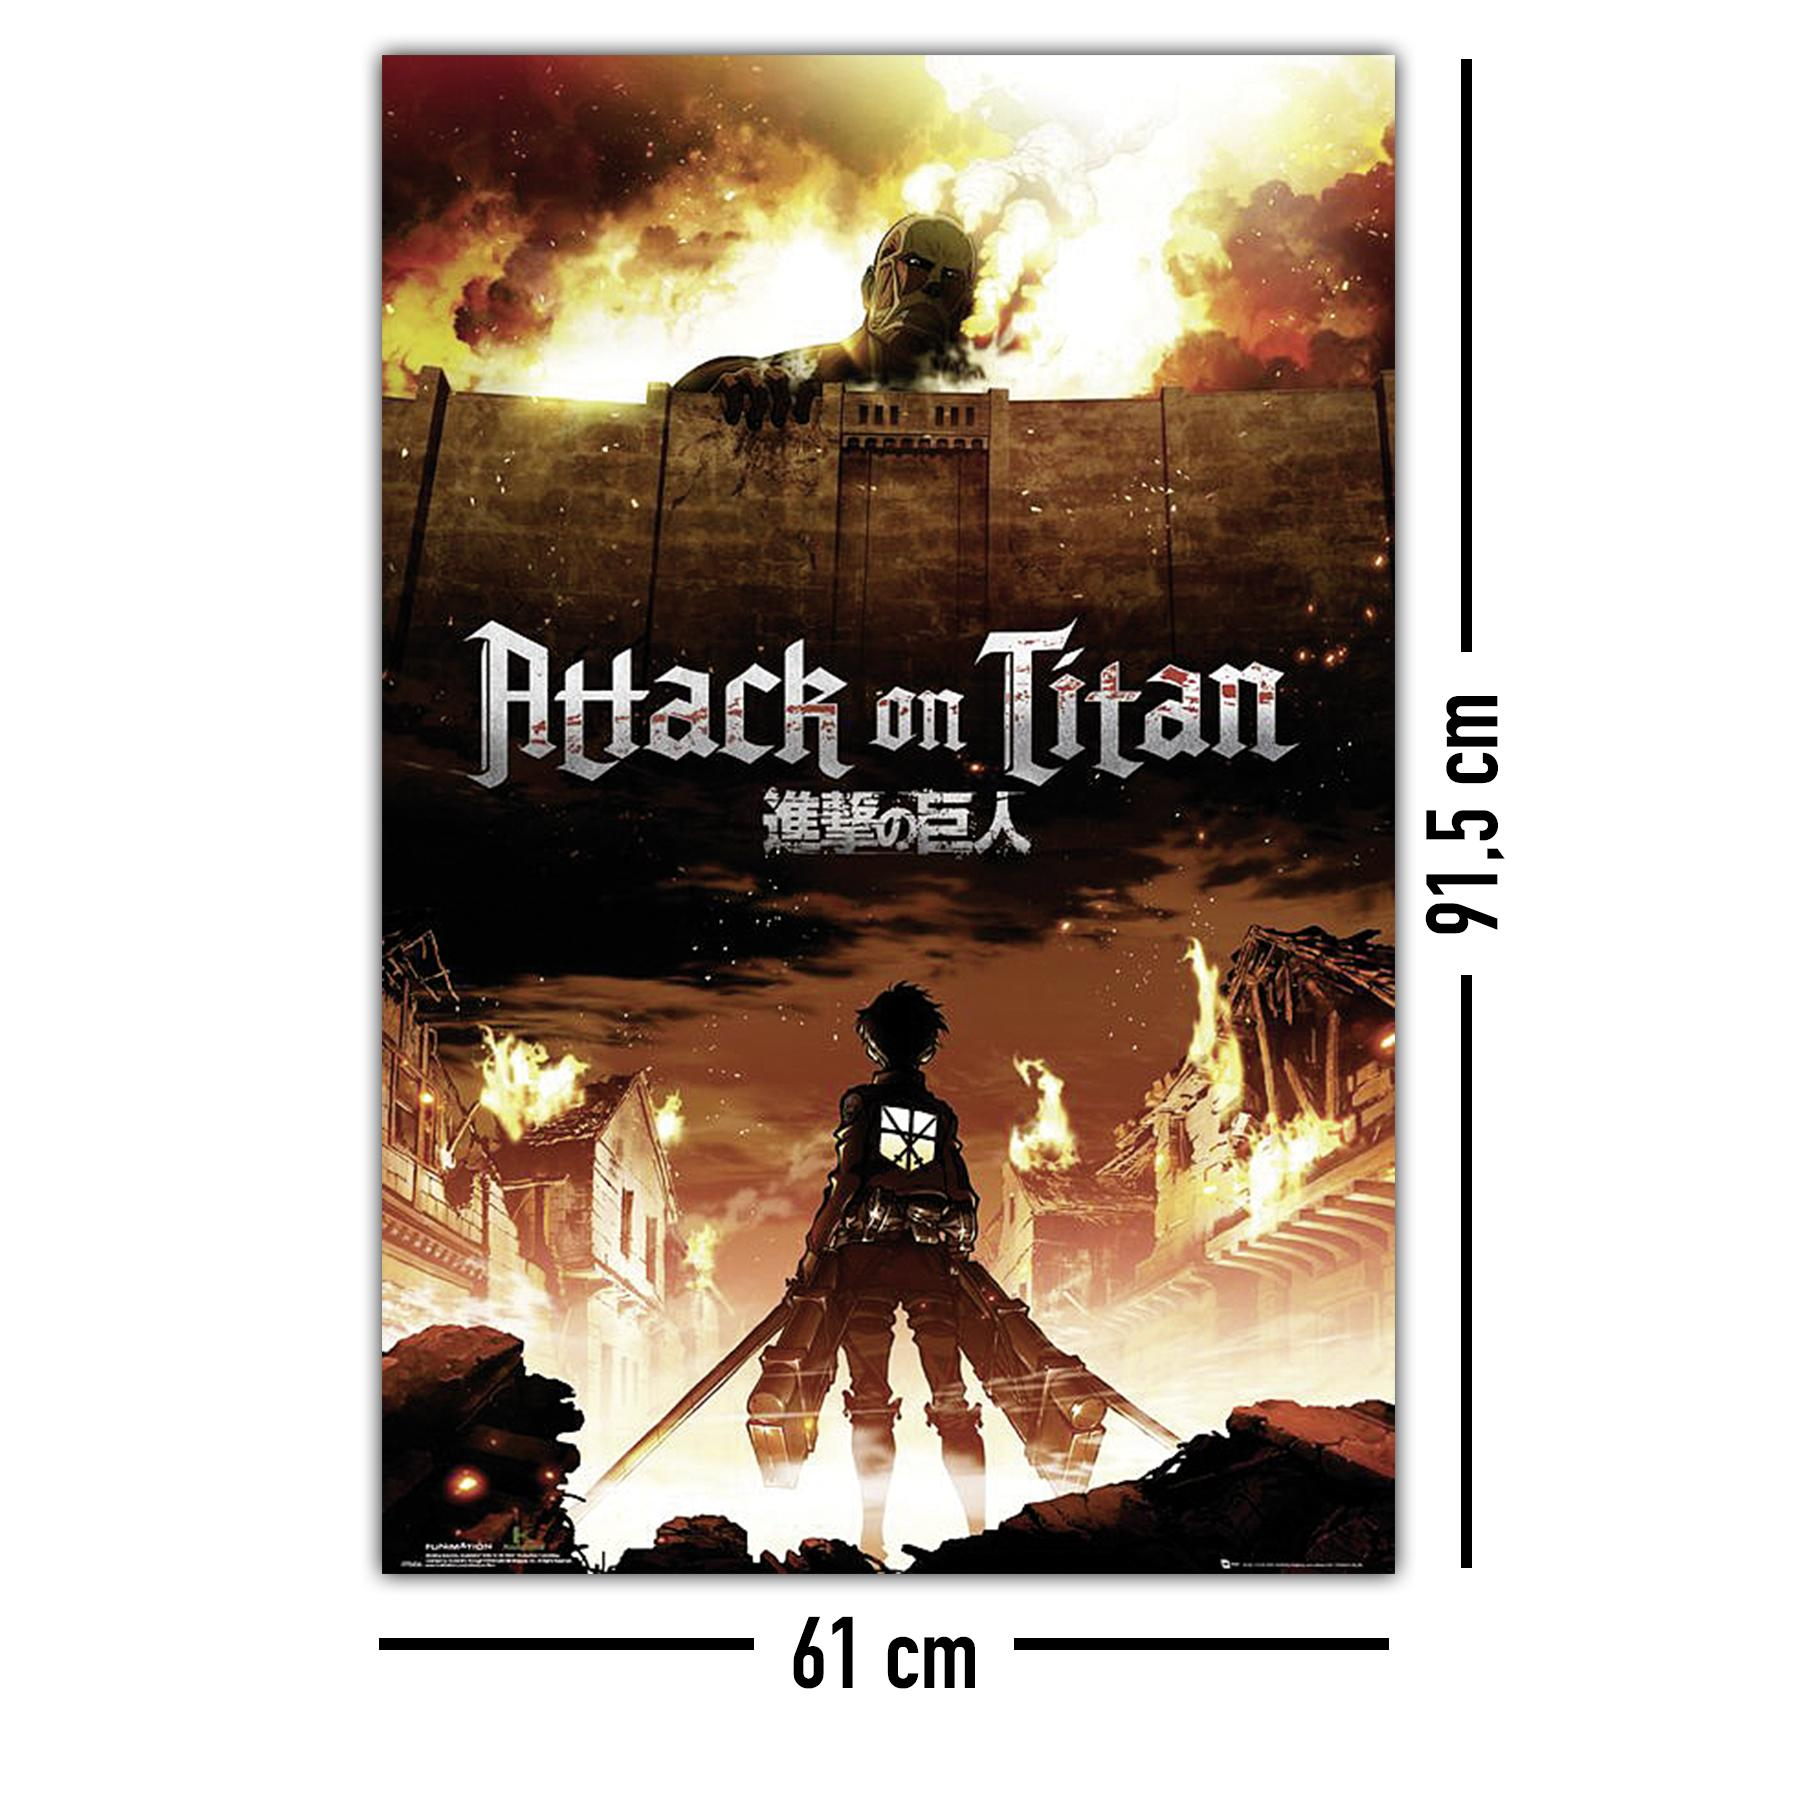 GB EYE Attack Titan Poster Großformatige Poster On / Manga Anime